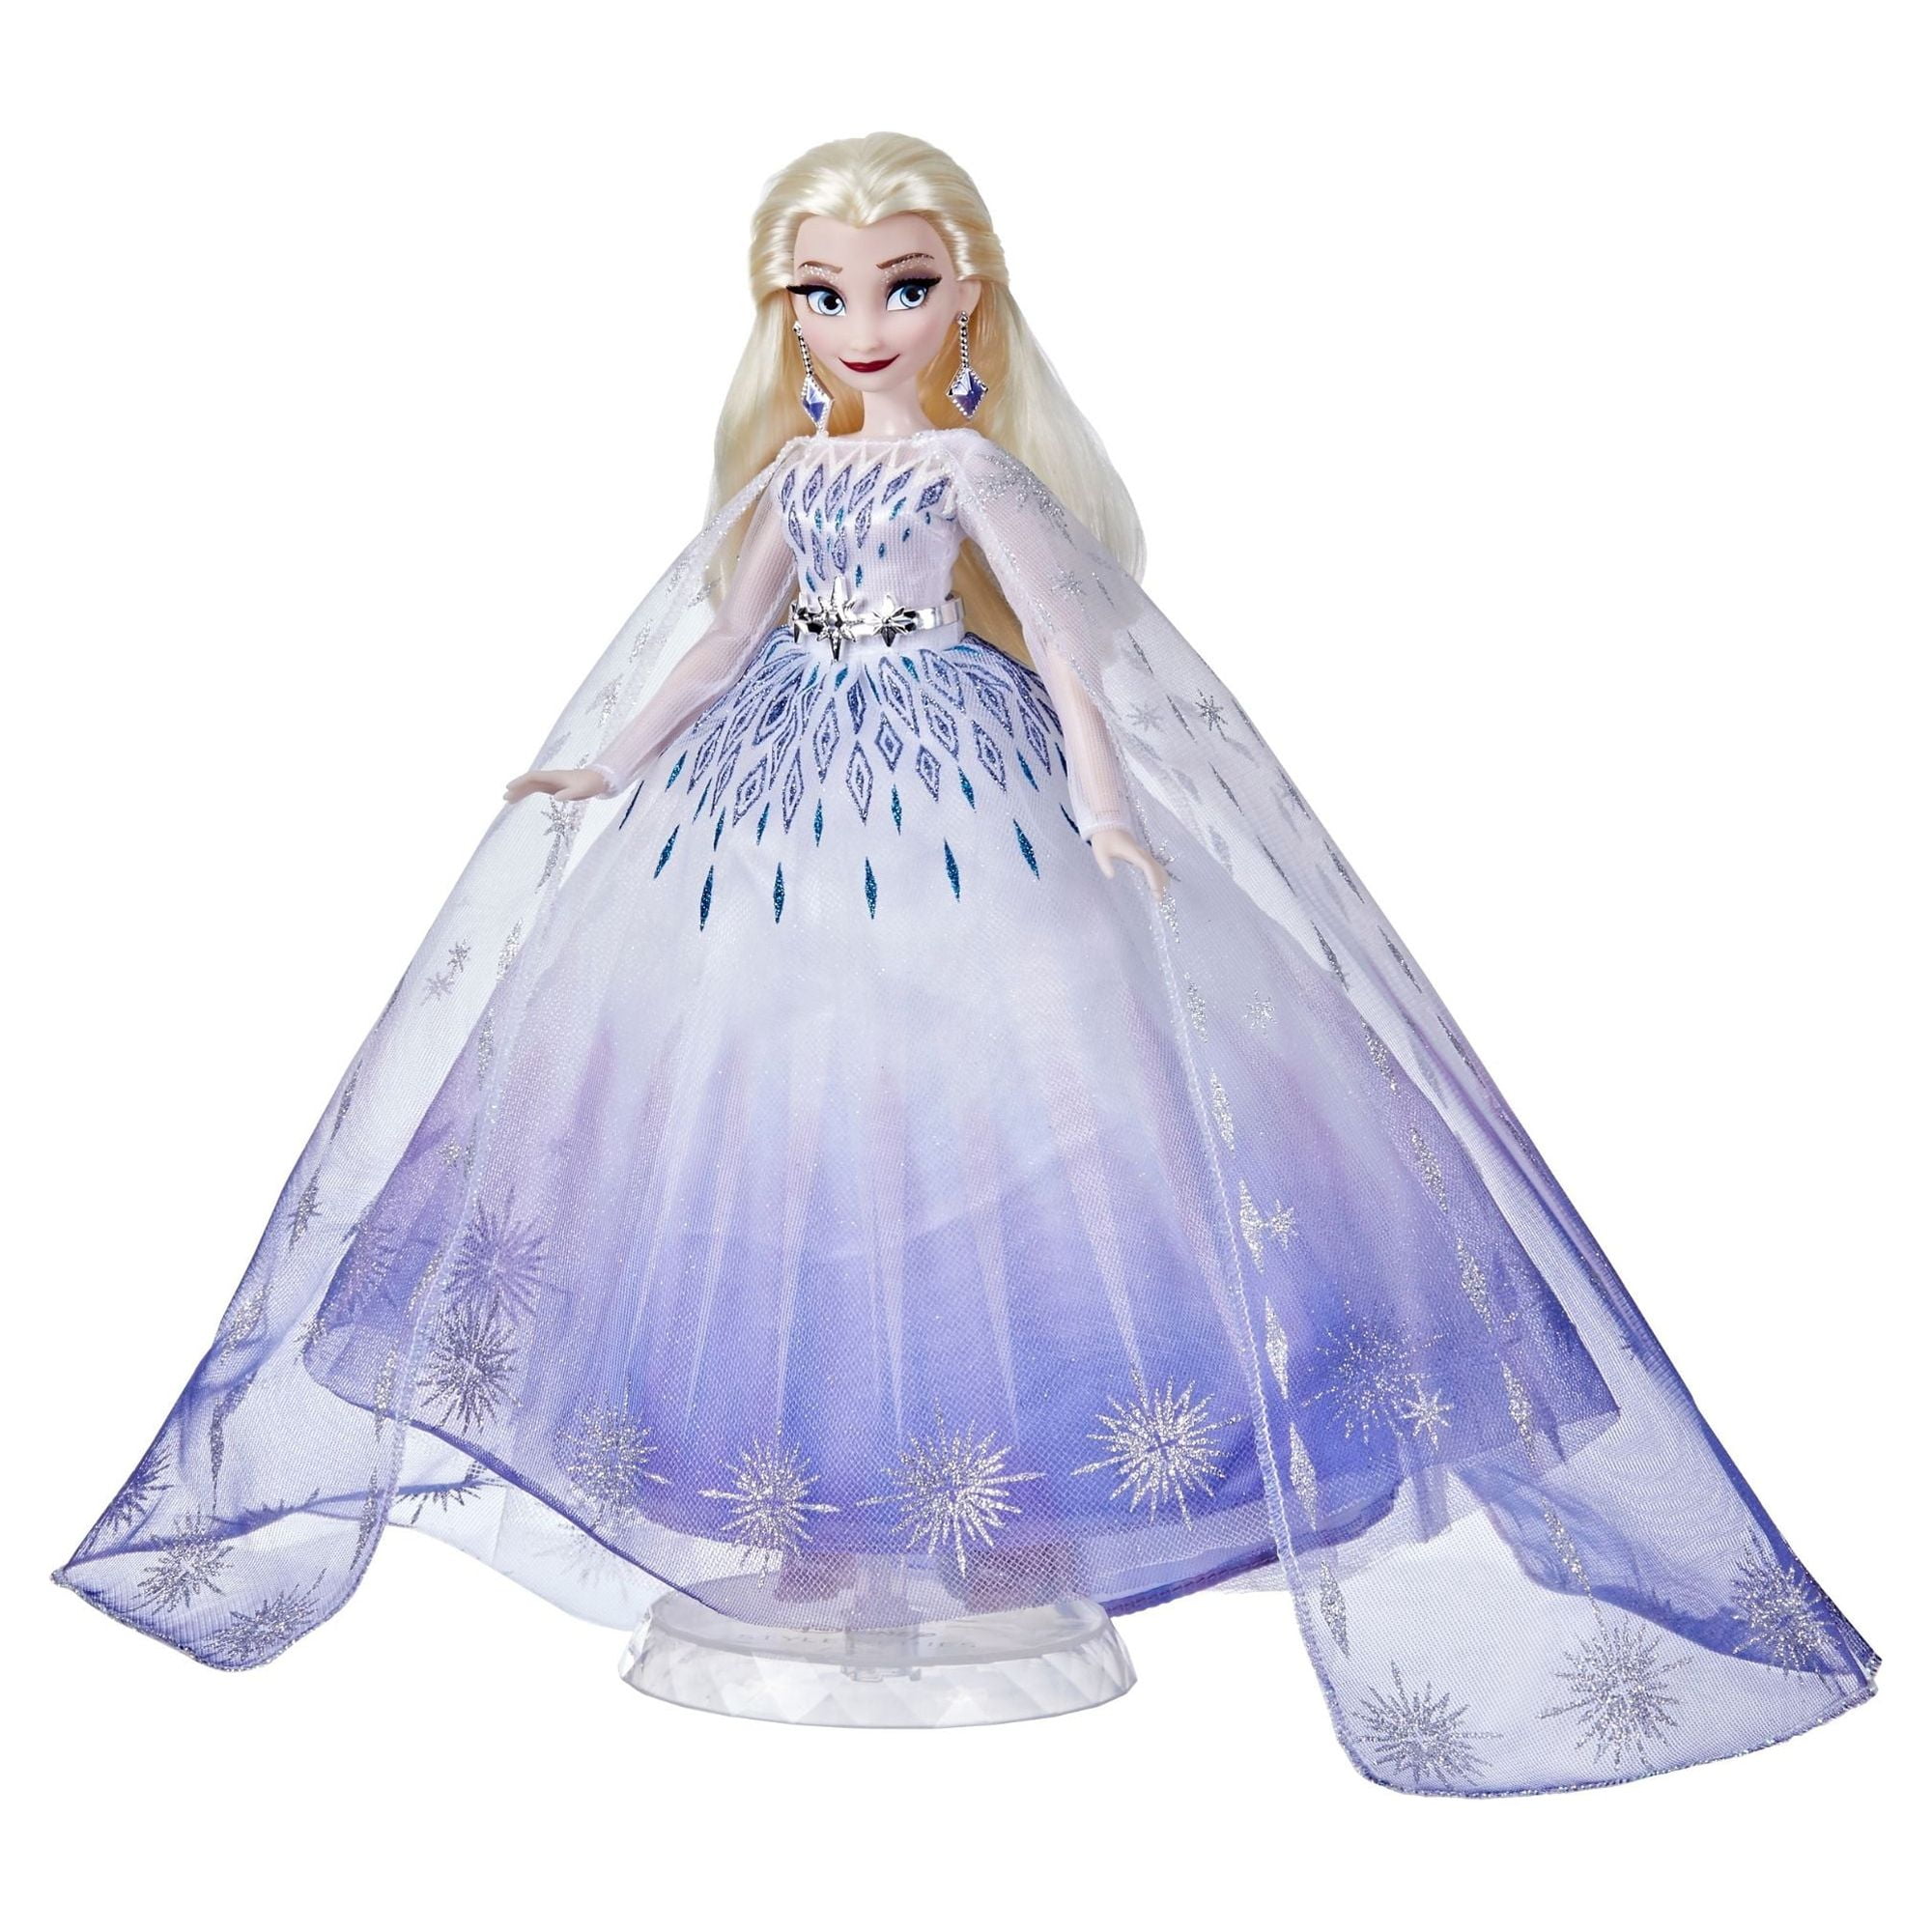 Disney Princesses Art Frozen Elsa Cinderella Snow White Ariel Rapunzel etc